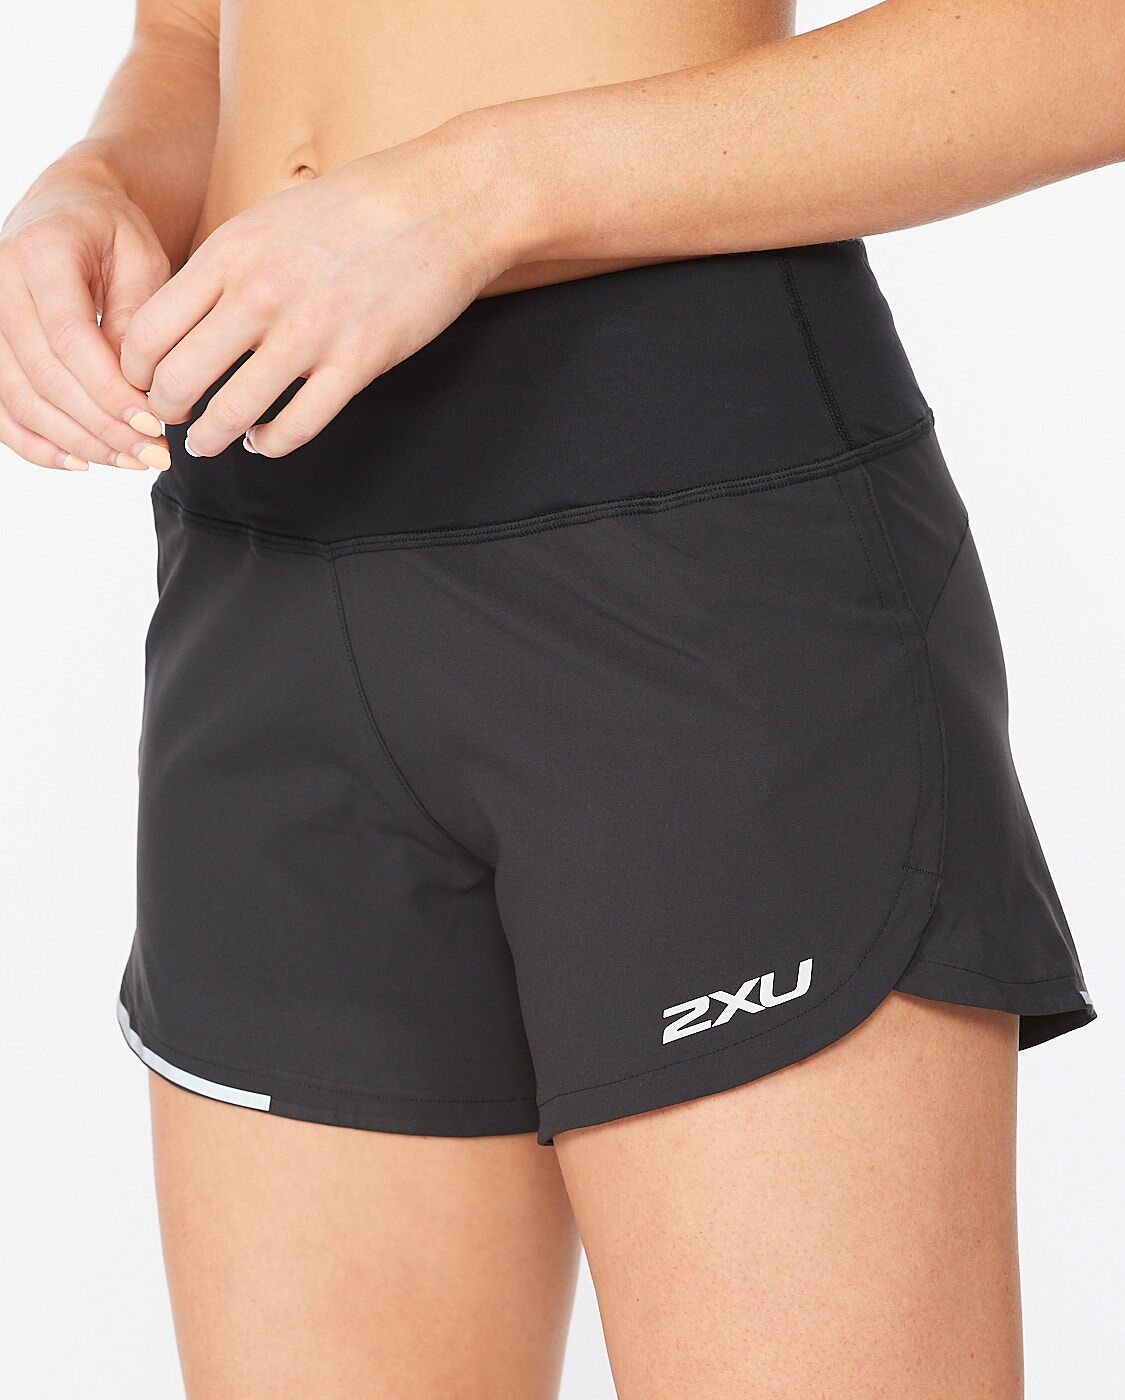 2XU South Africa - Womens Aero 4 inch Shorts - Black/Silver Reflective